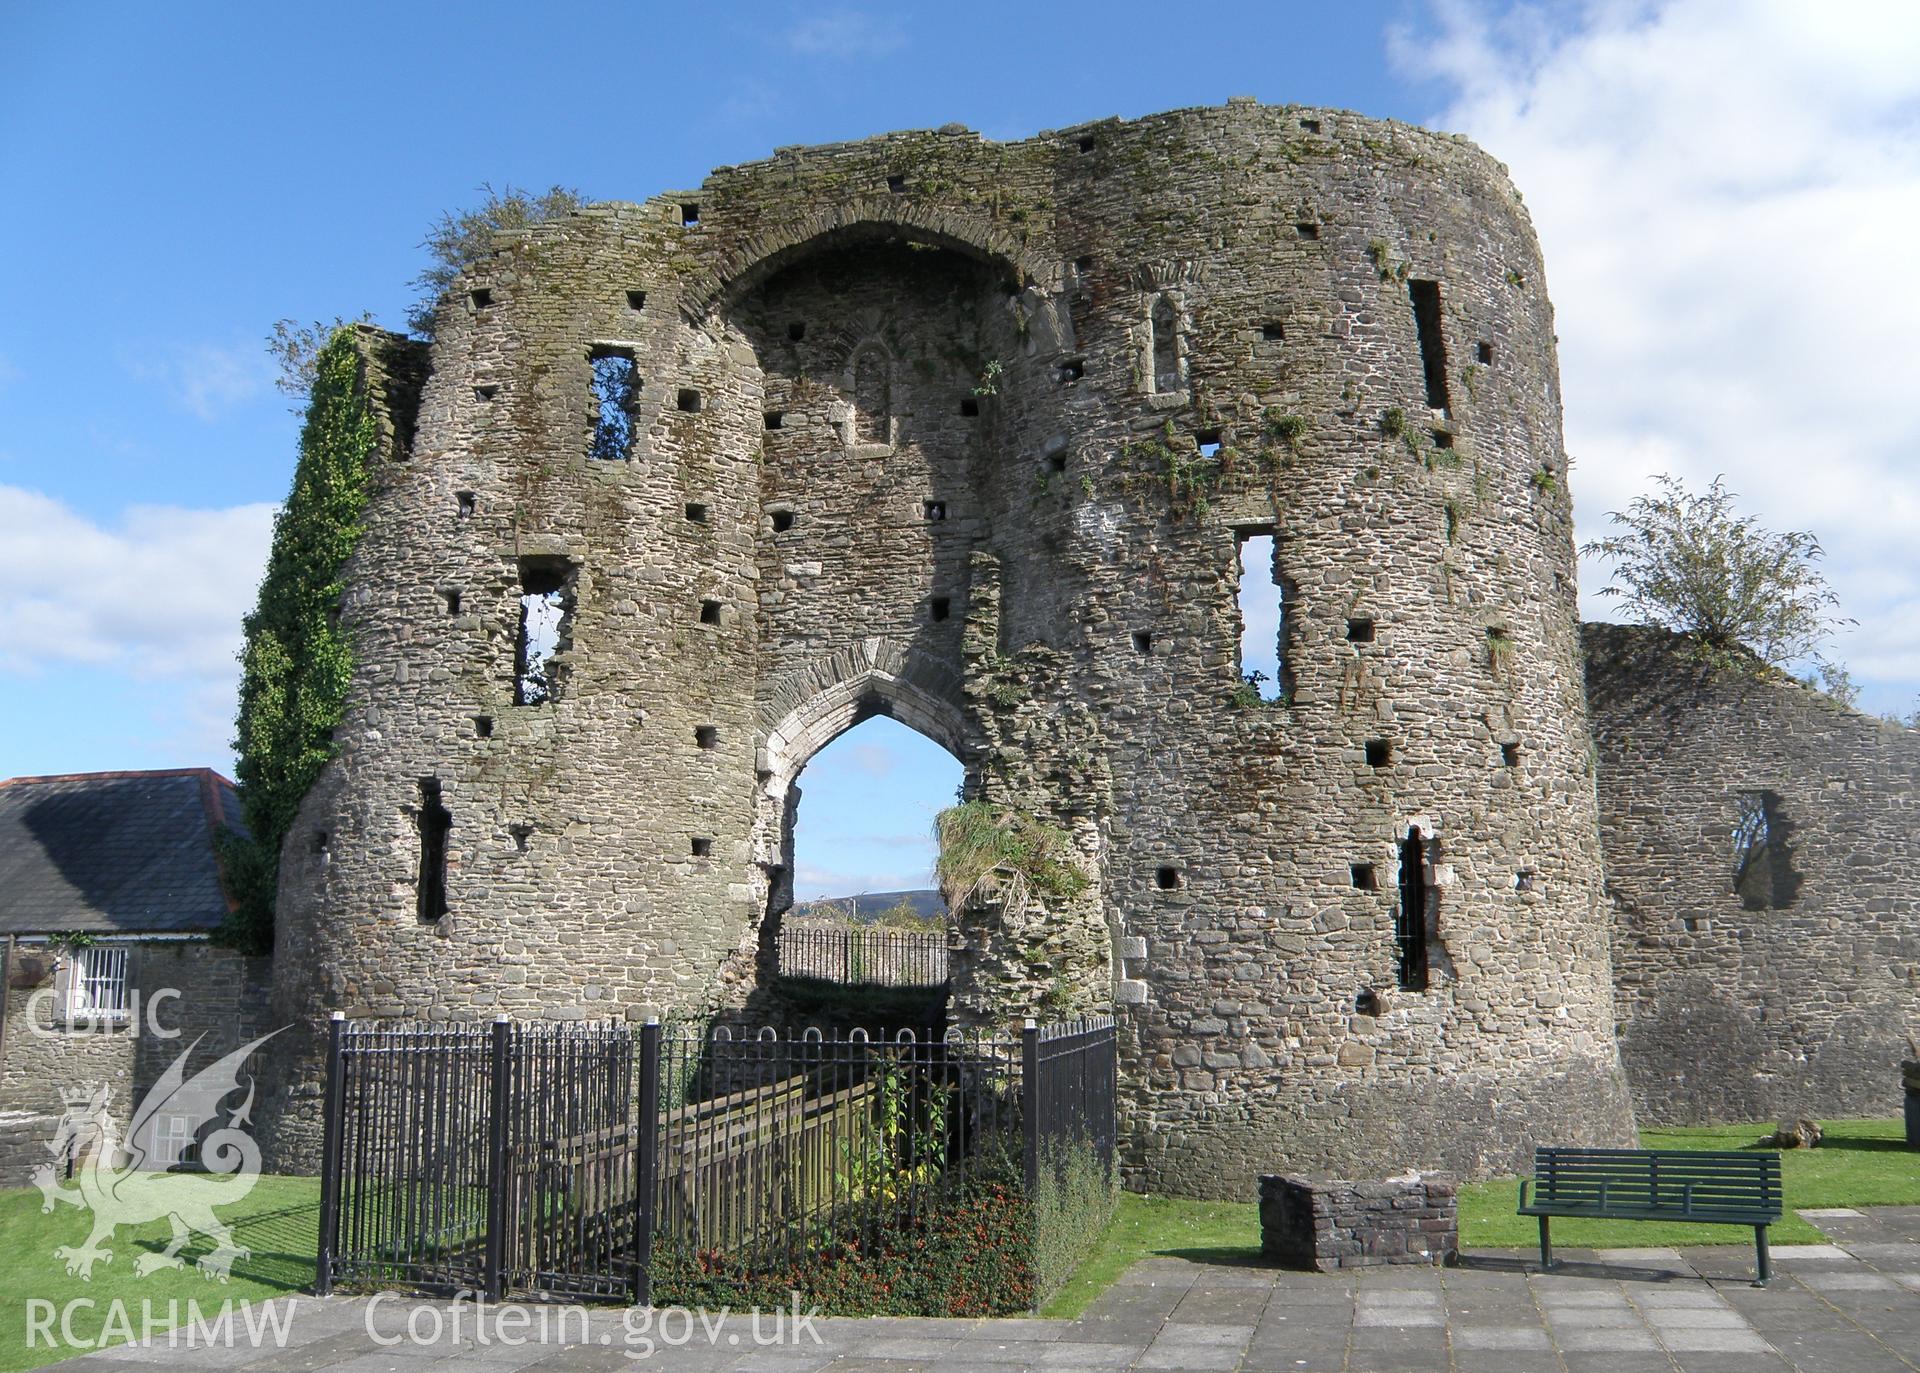 Colour photo showing Neath Castle, produced by Paul R. Davis,  26th September 2009.